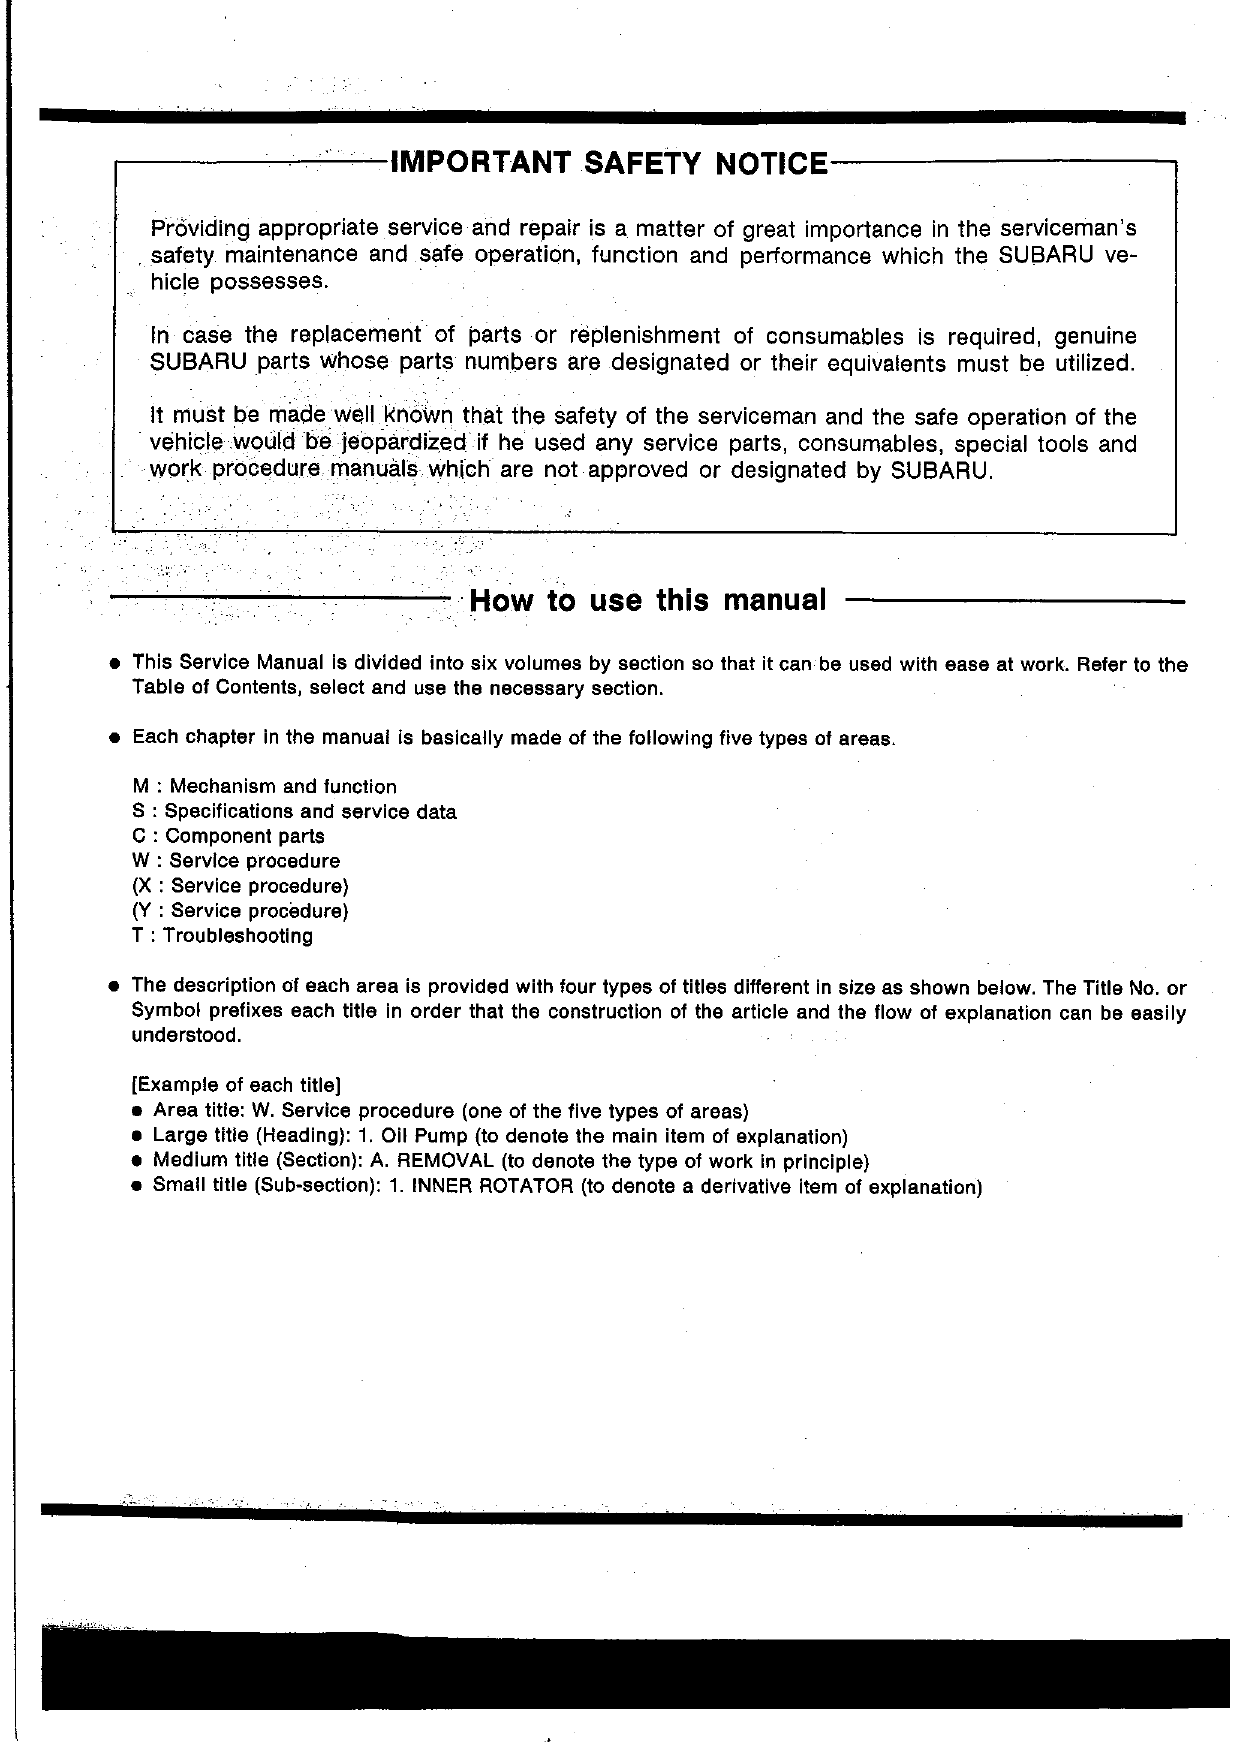 1989-1992 Subaru Liberty, Subaru Legacy service manual Preview image 3